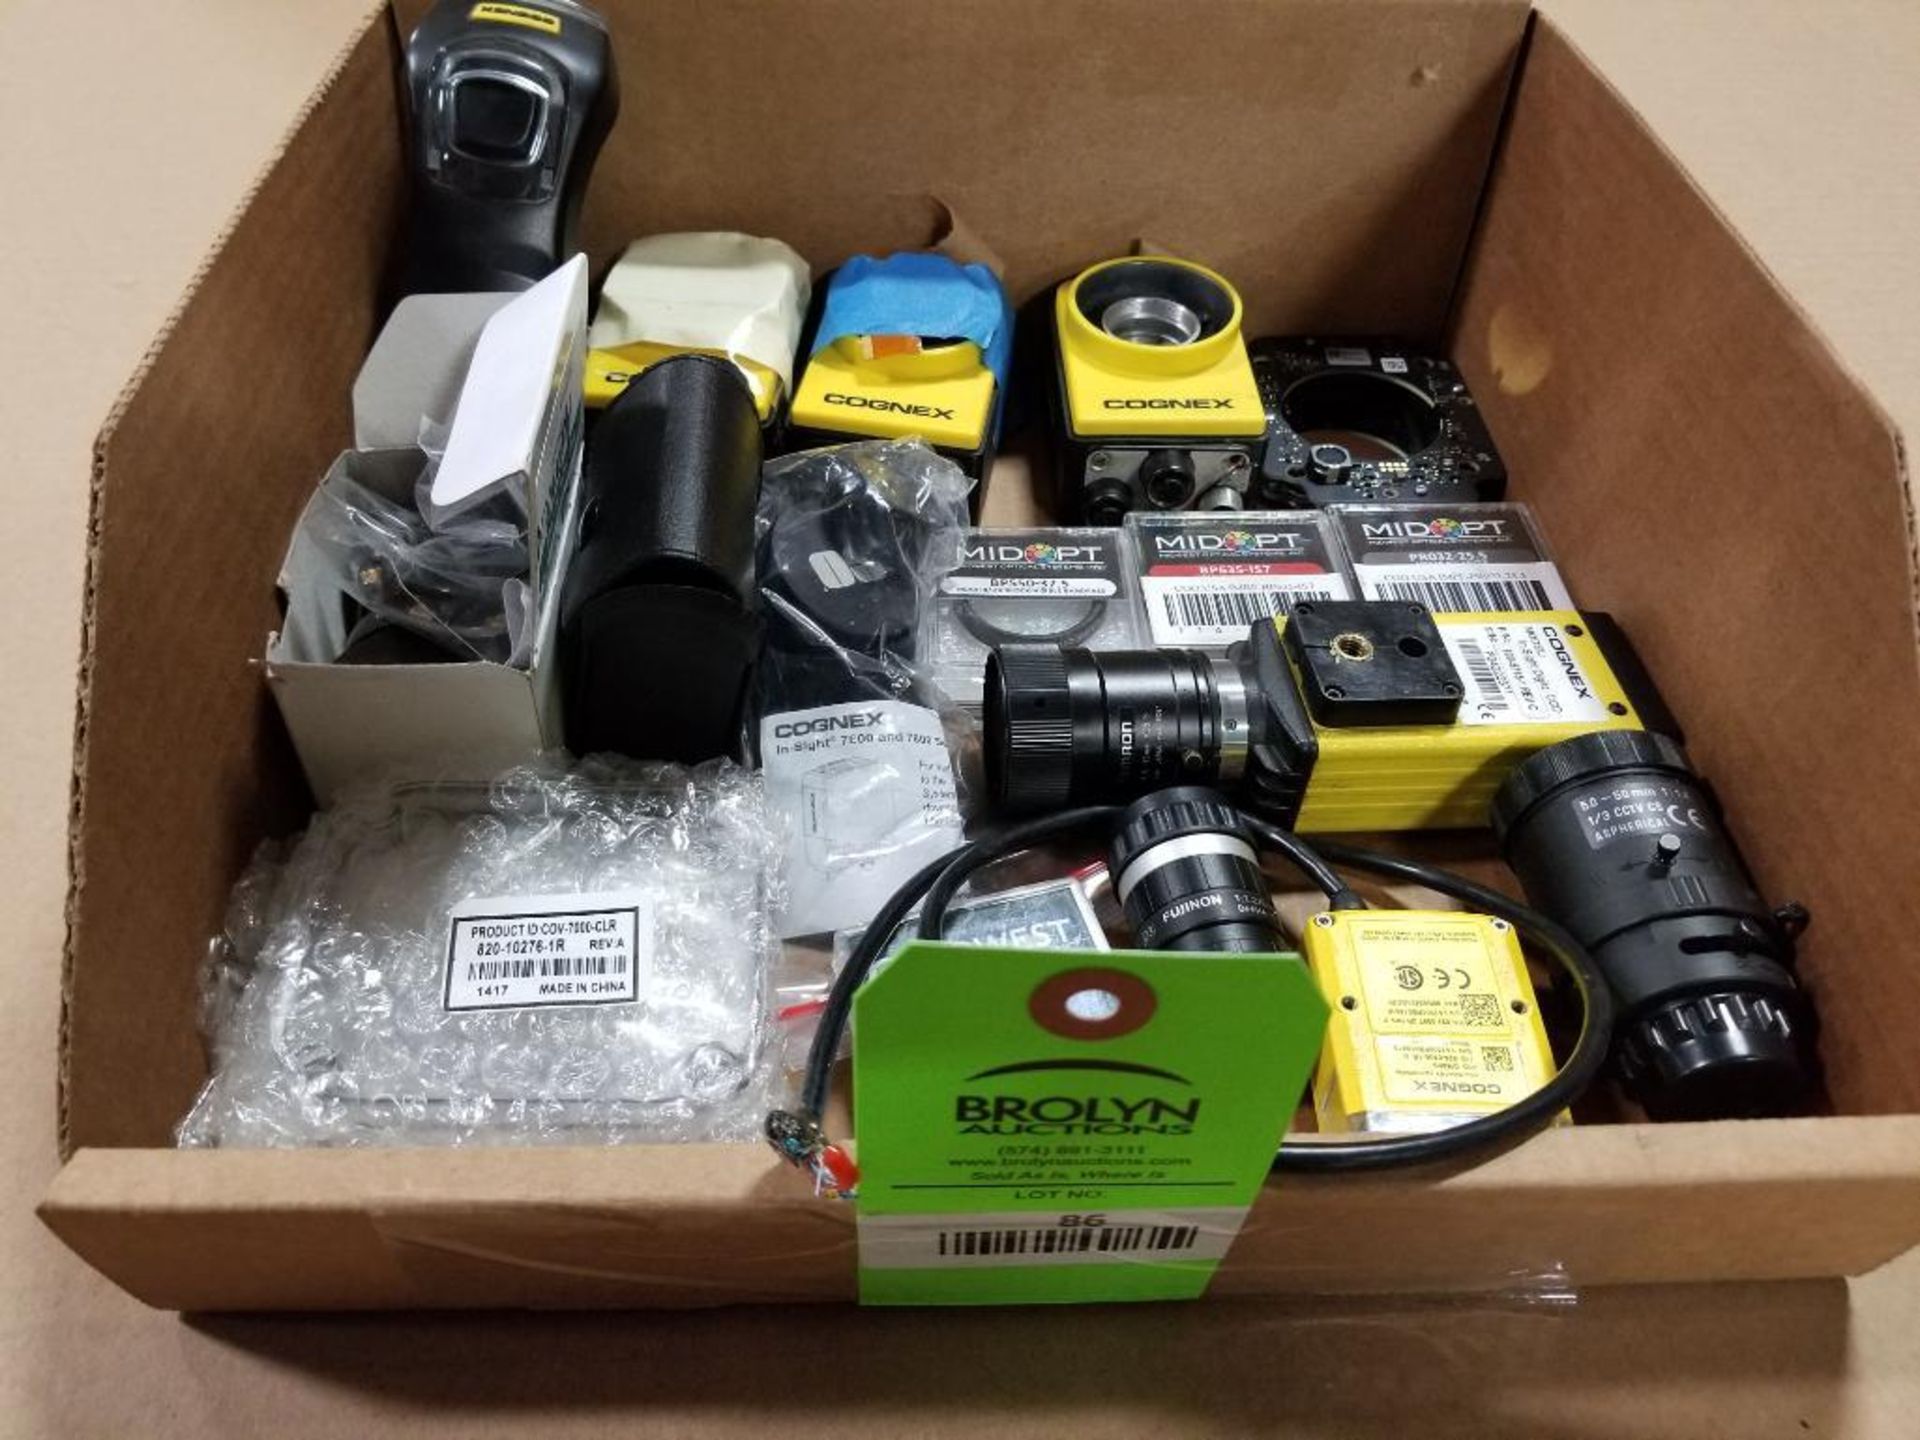 Assorted camera equipment. Cognex, Mid PT.